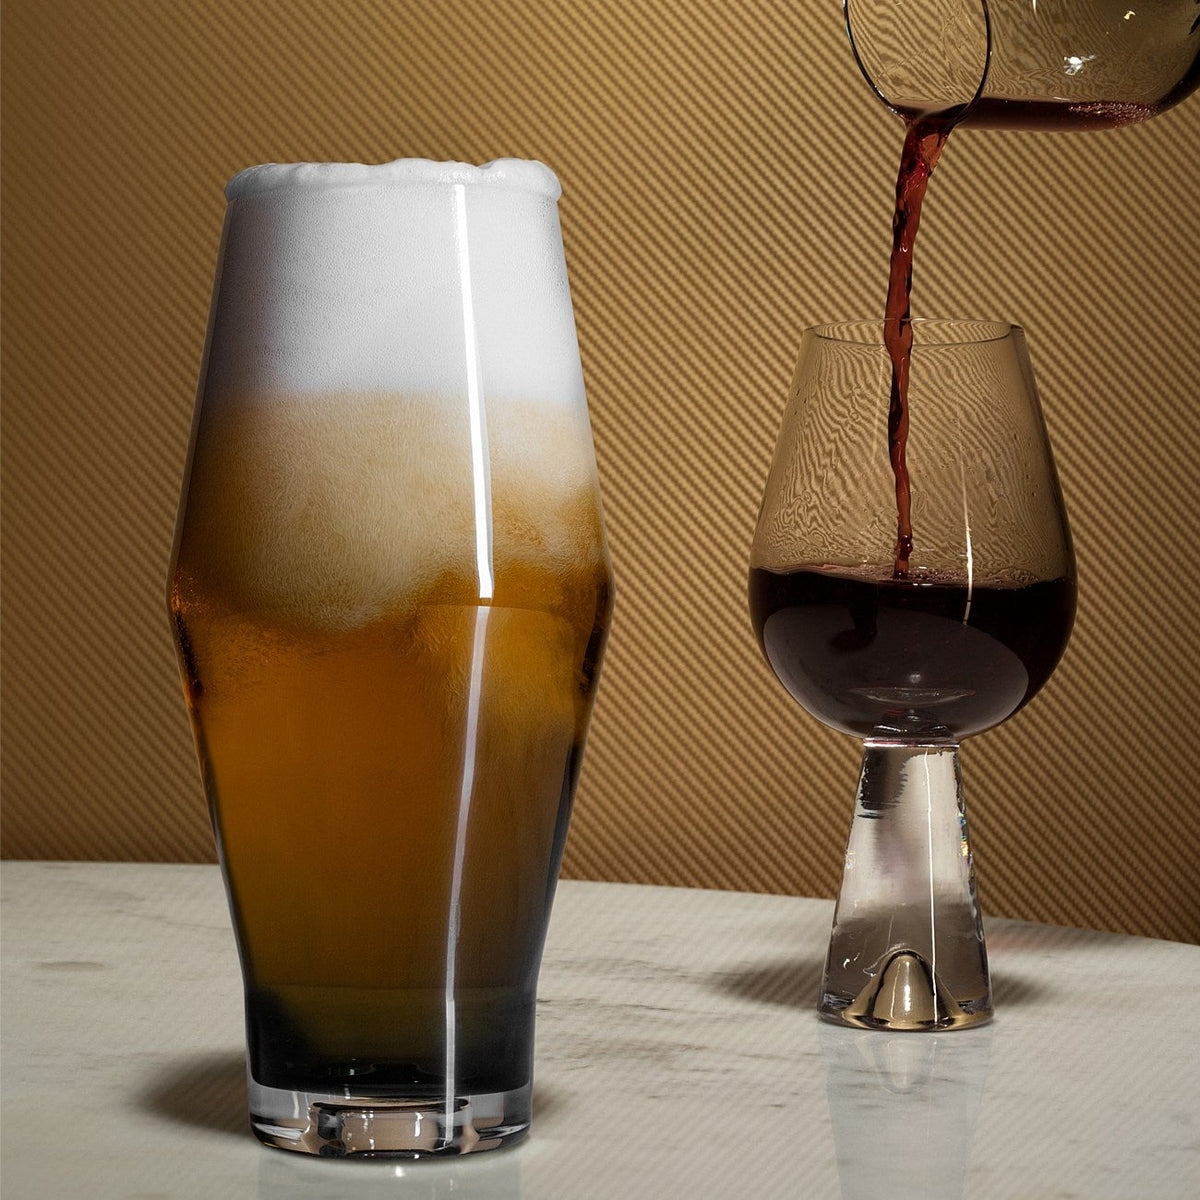 Tank Wine Glasses - Black (Set of Two)